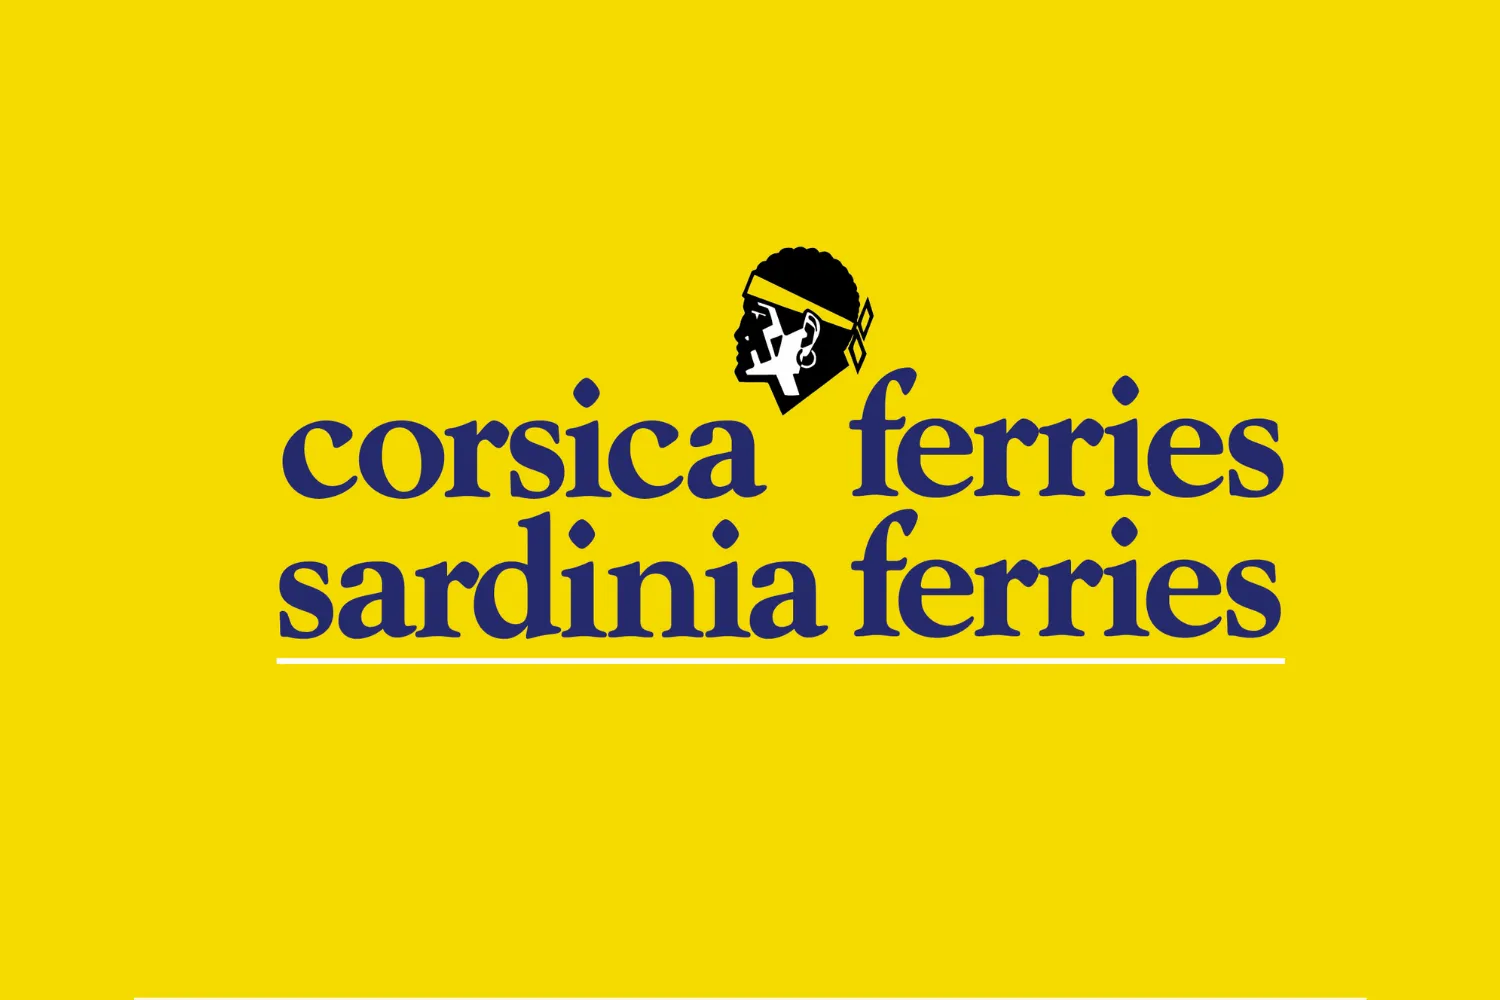 Corsica Ferries news image